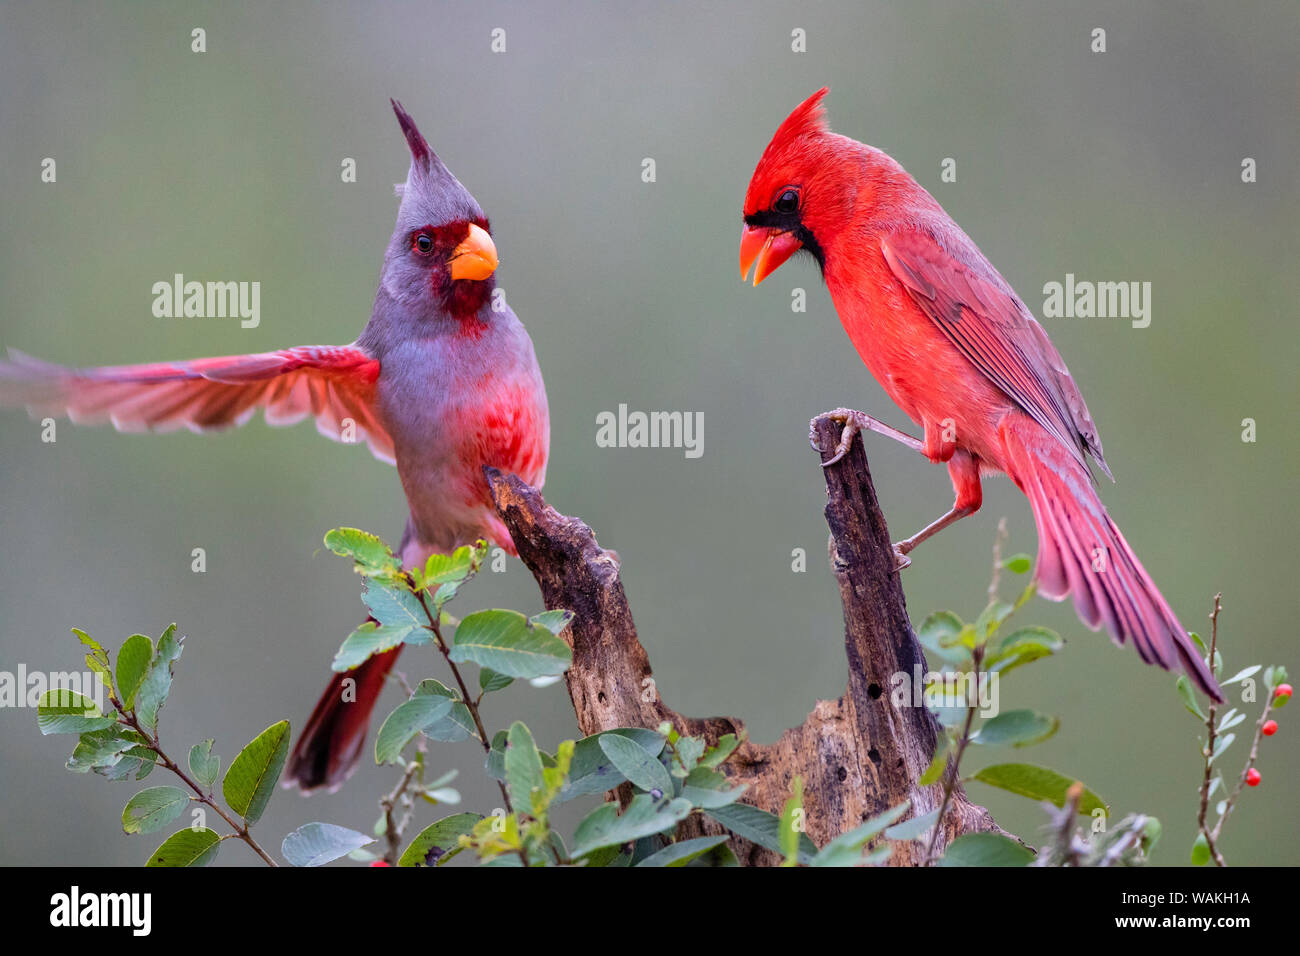 Pyrrhuloxia (Cardinalis sinuatus) and Northern cardinal (Cardinalis cardinalis) perched together. Stock Photo